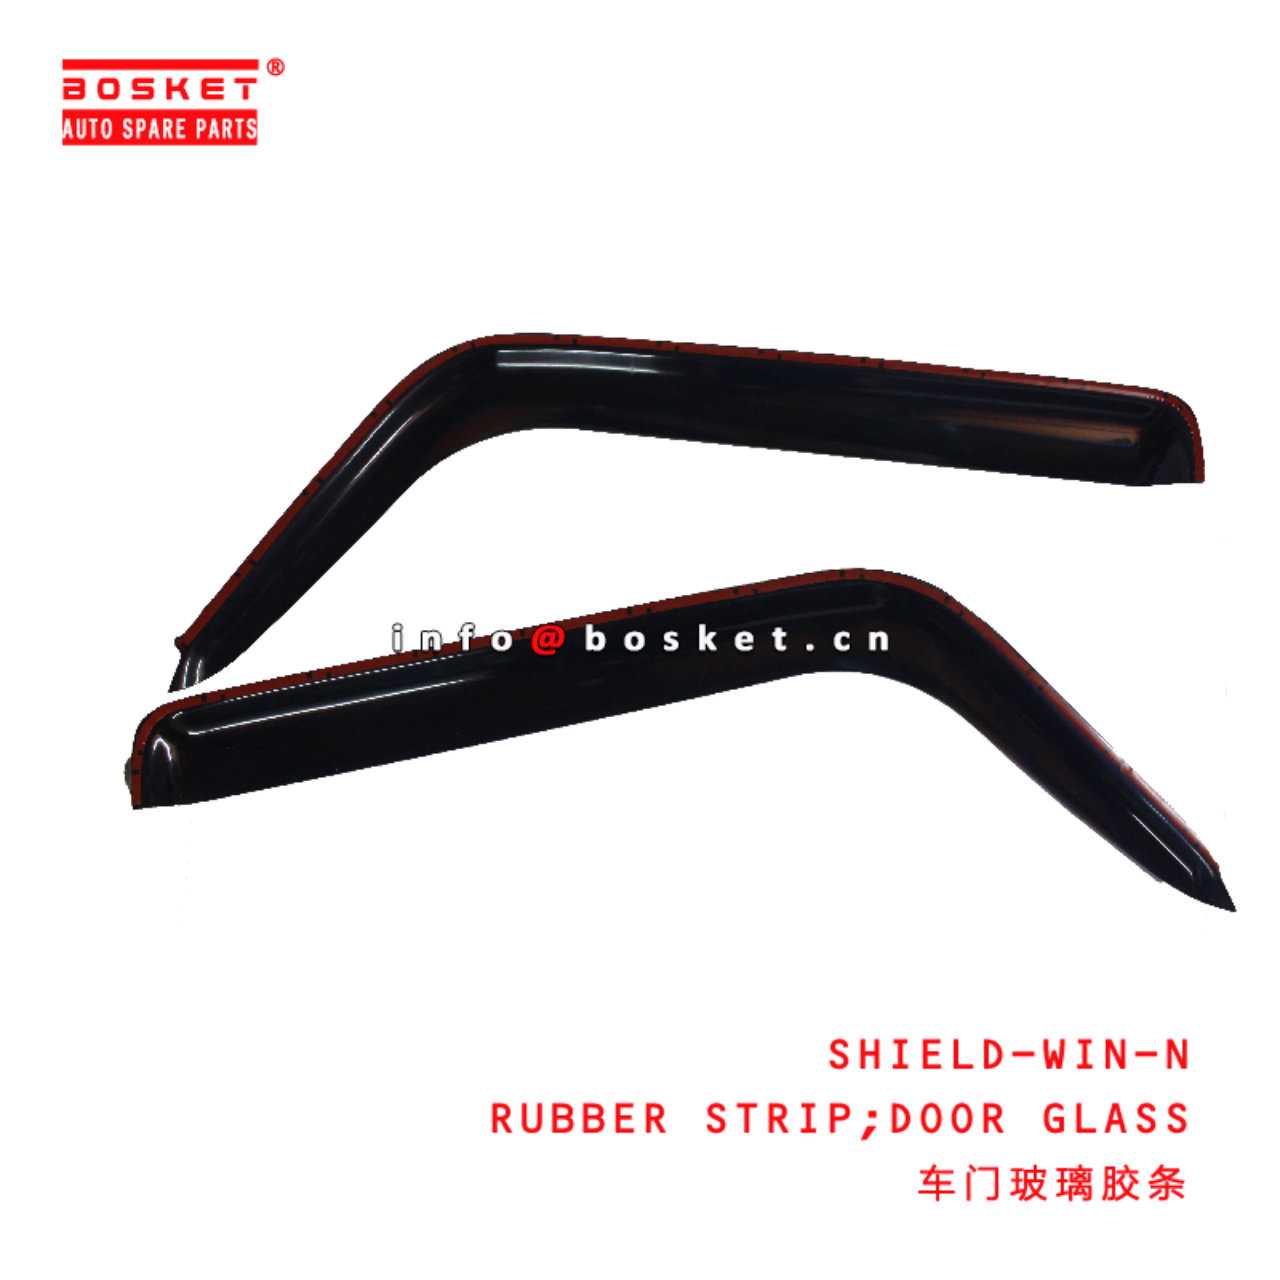 SHIELD-WIN-N Door Glass Rubber Strip suitable for ISUZU 600P 4KH1 SHIELD-WIN-N